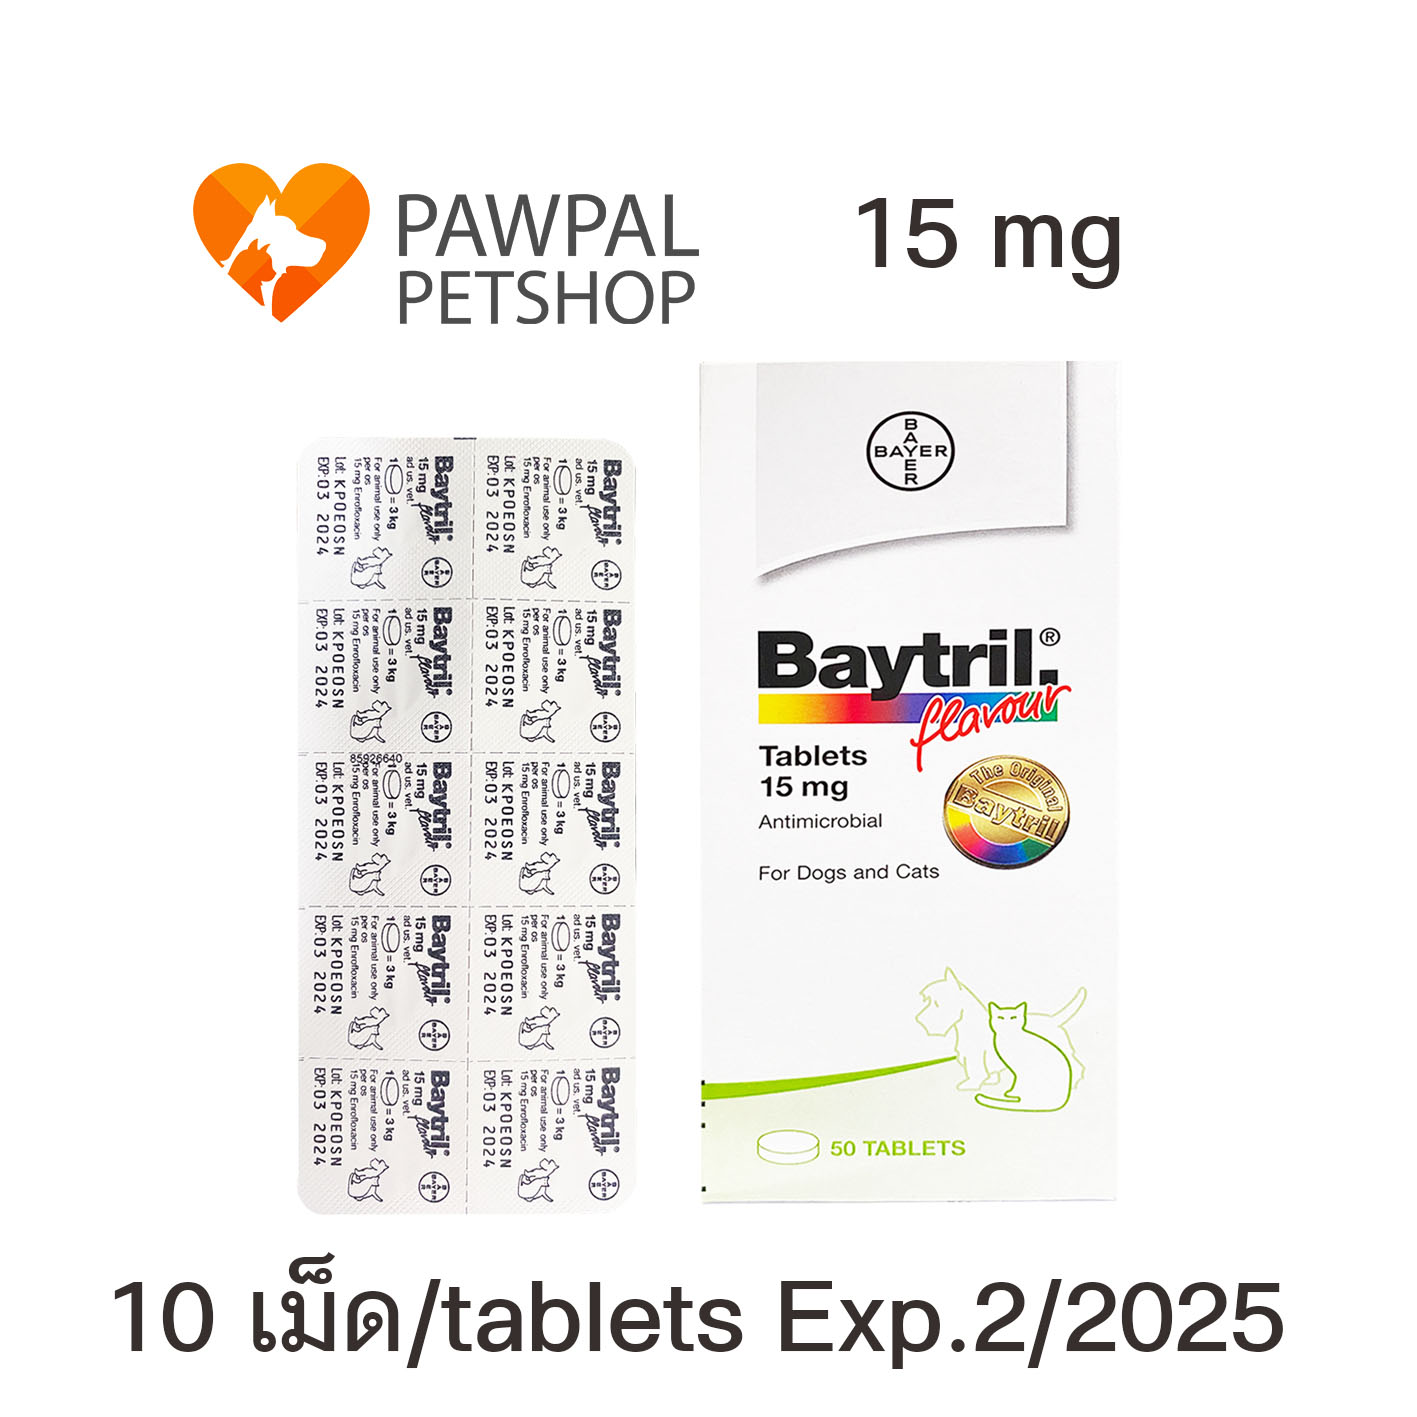 Baytrilไบทริล 15 mg Tablets Exp.2/2025 ชนิดเม็ด รสเนื้อ สุนัข แมว dog cat (1 แผง 10 เม็ด)